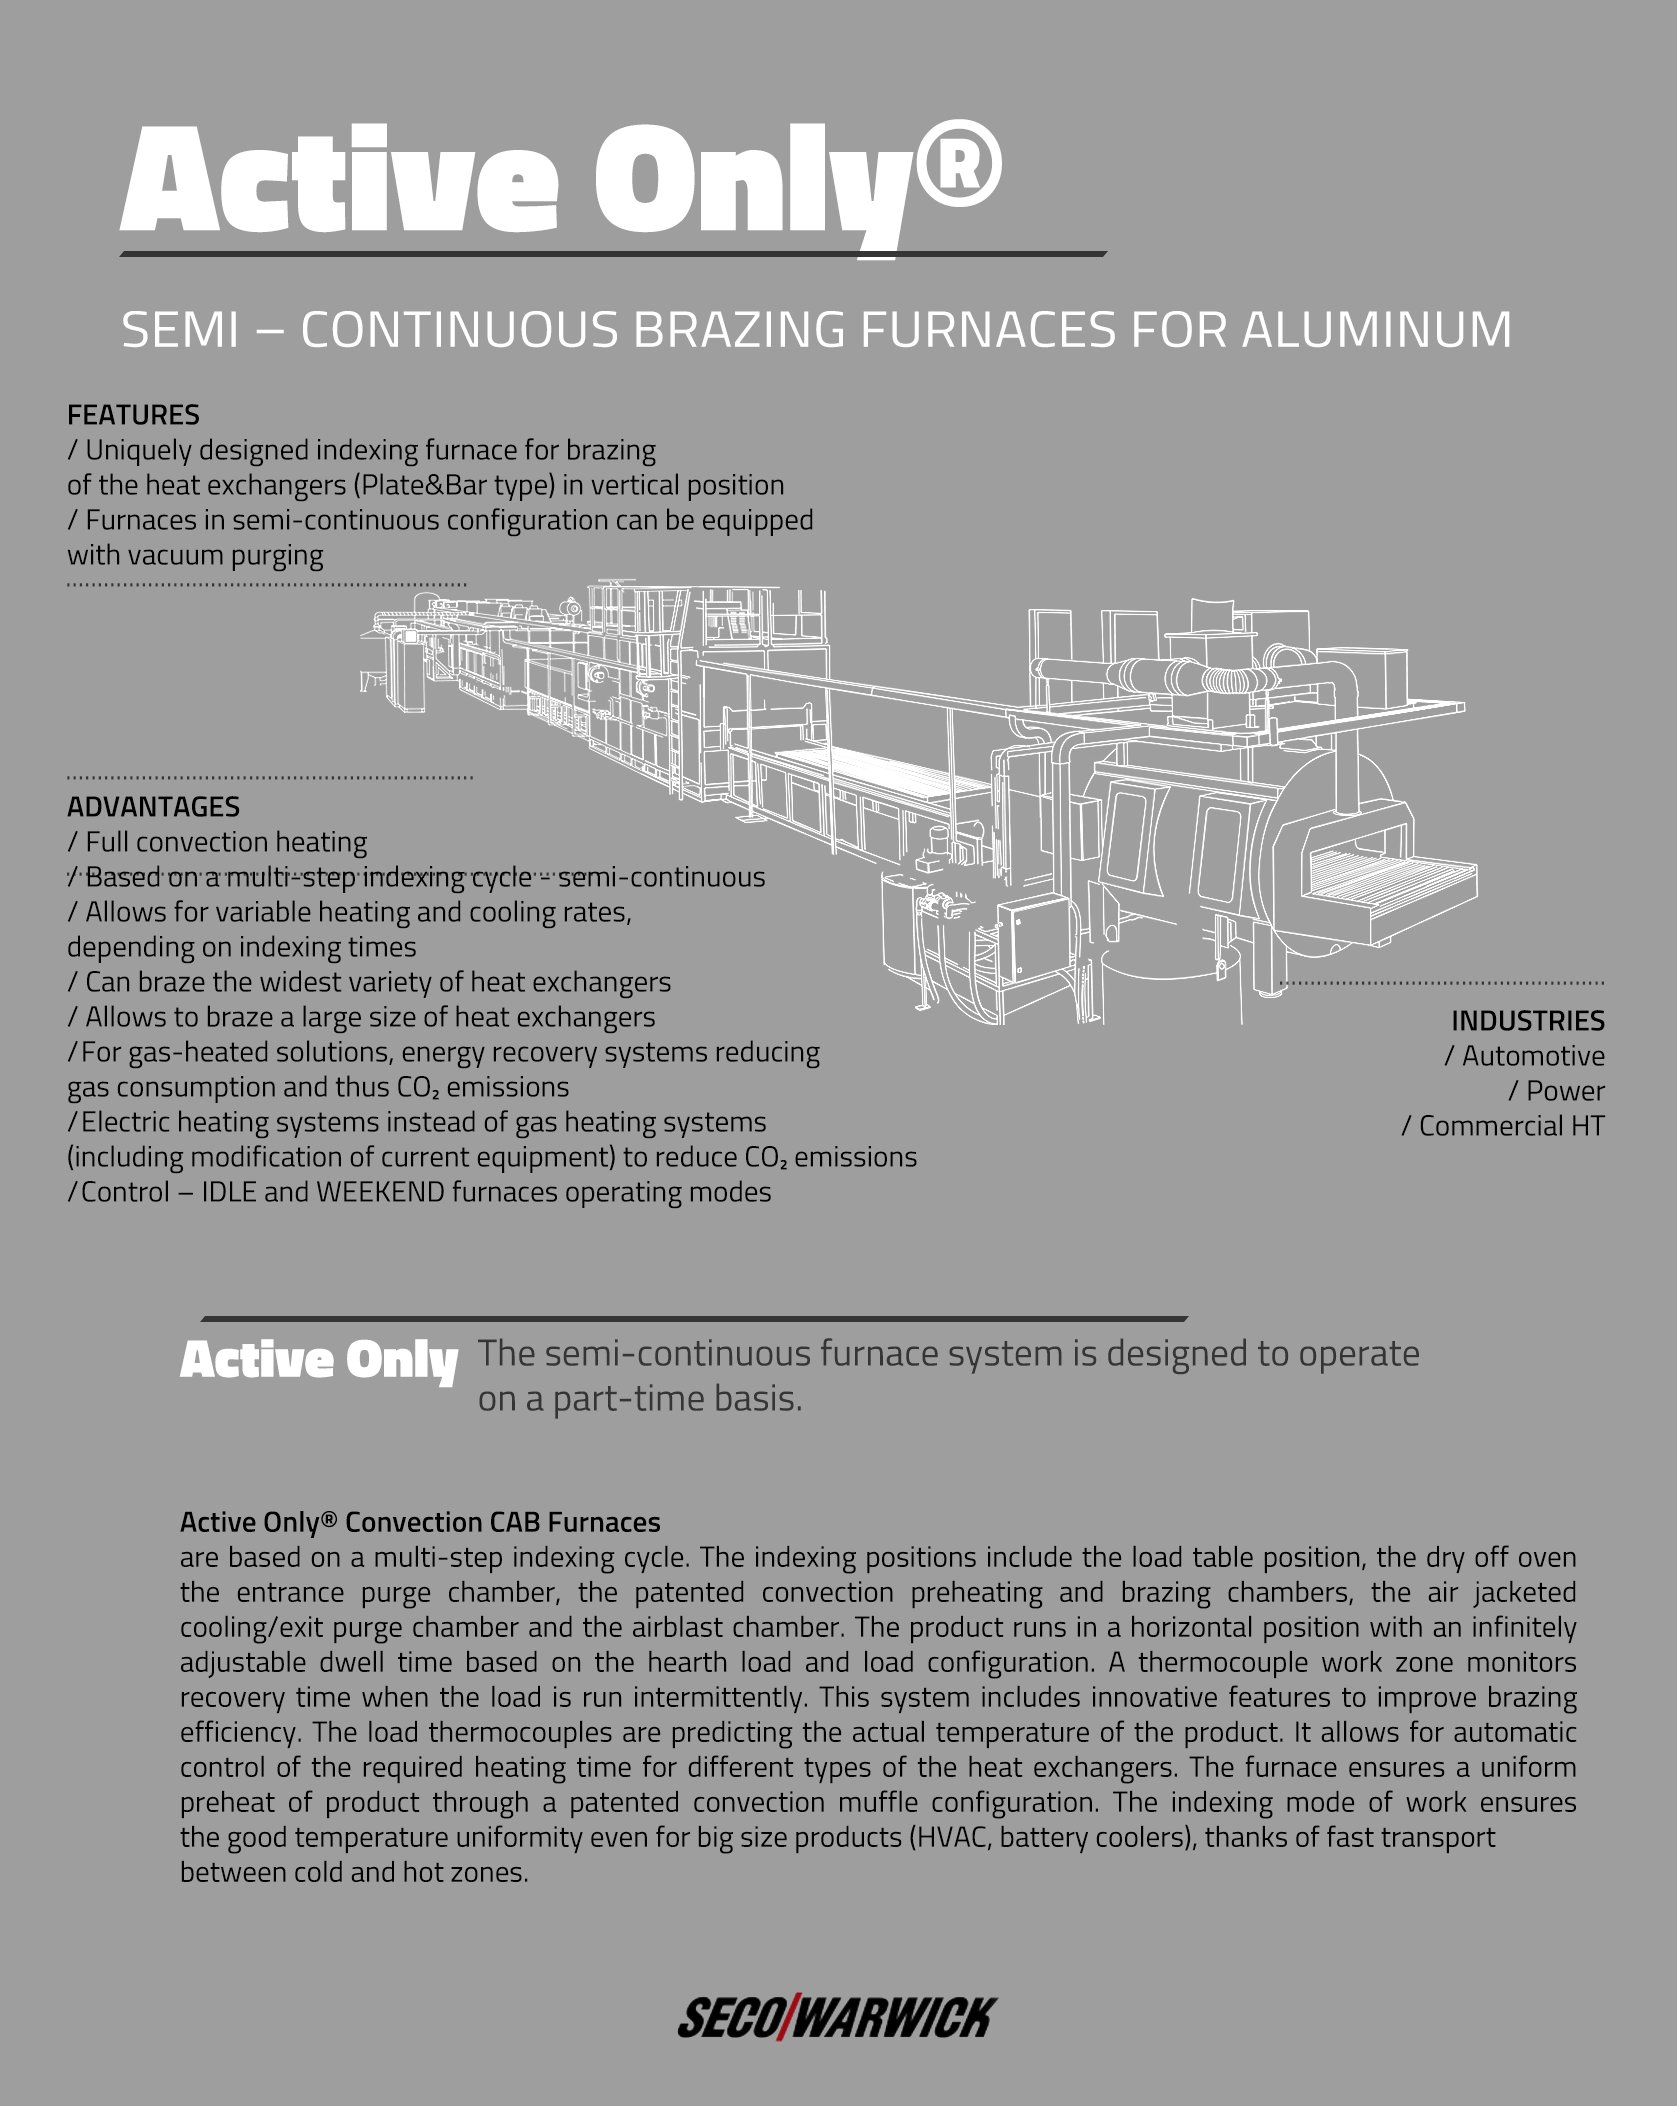 Semi – Continuous Brazing Furnaces for Aluminum